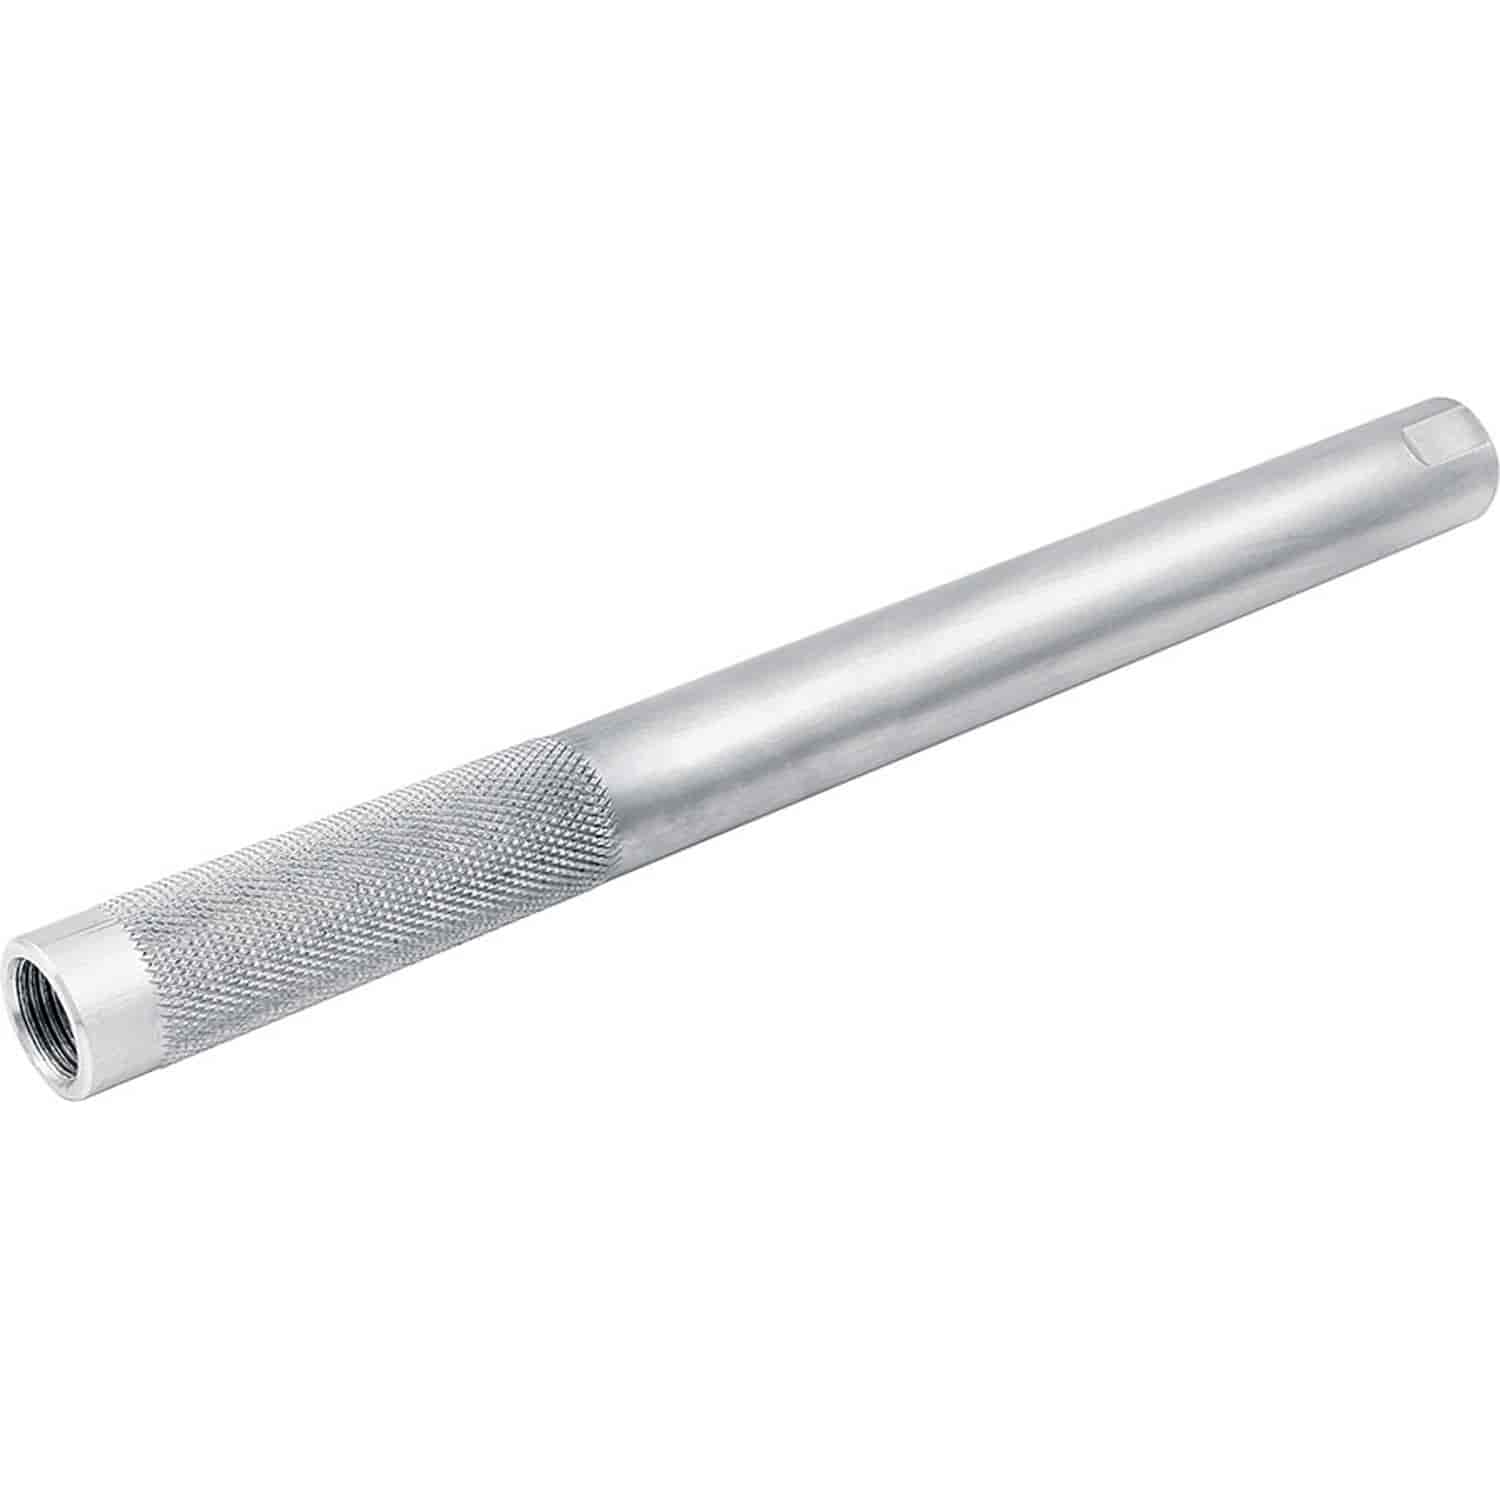 Swedged Aluminum Tie Rod Tube Length: 16"